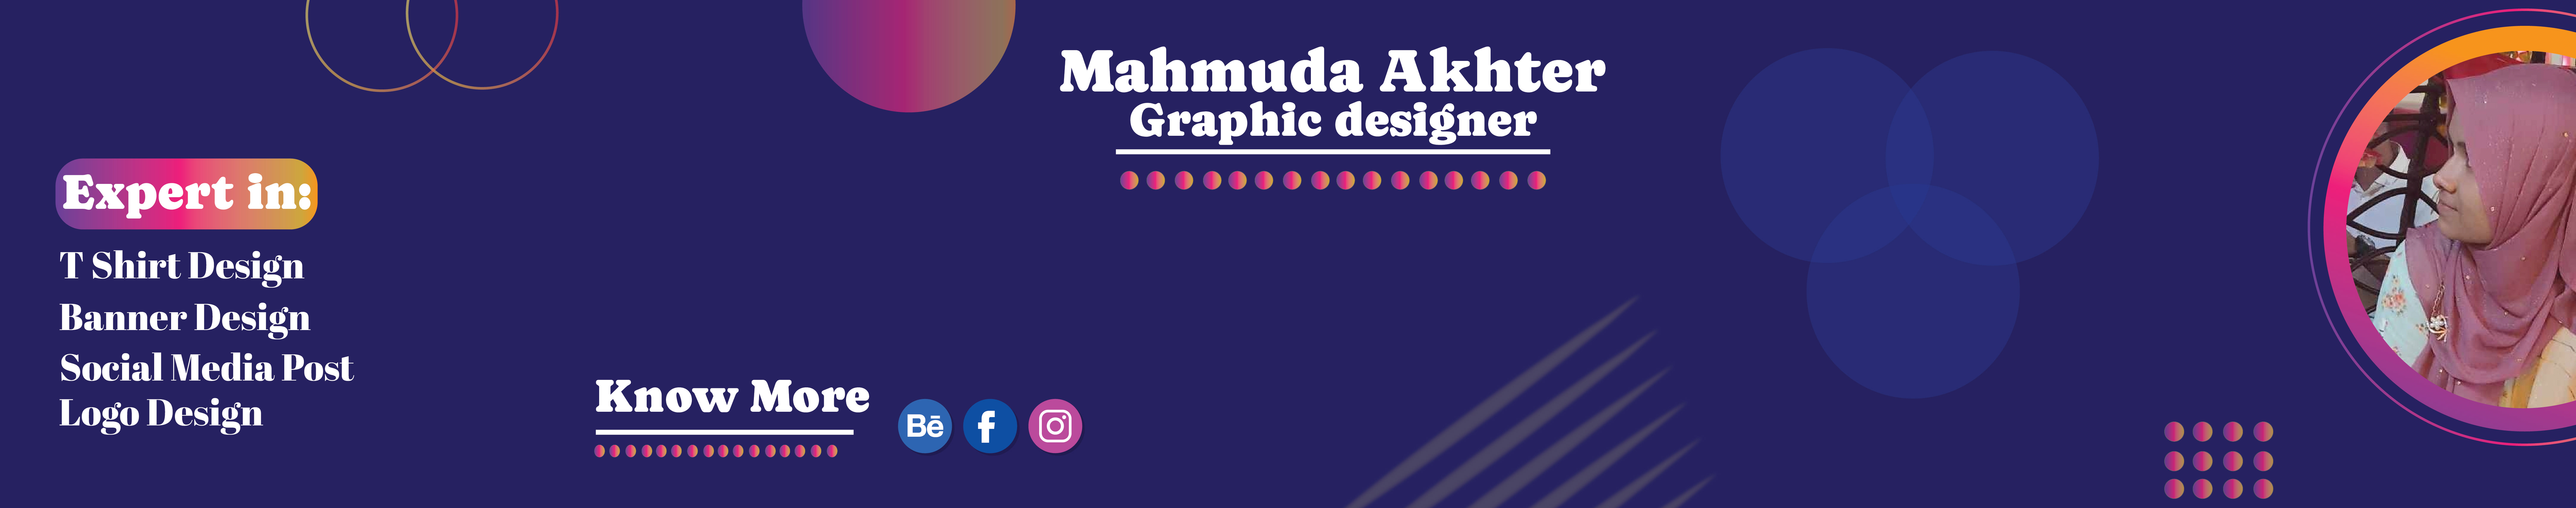 Mahmuda Akhter's profile banner